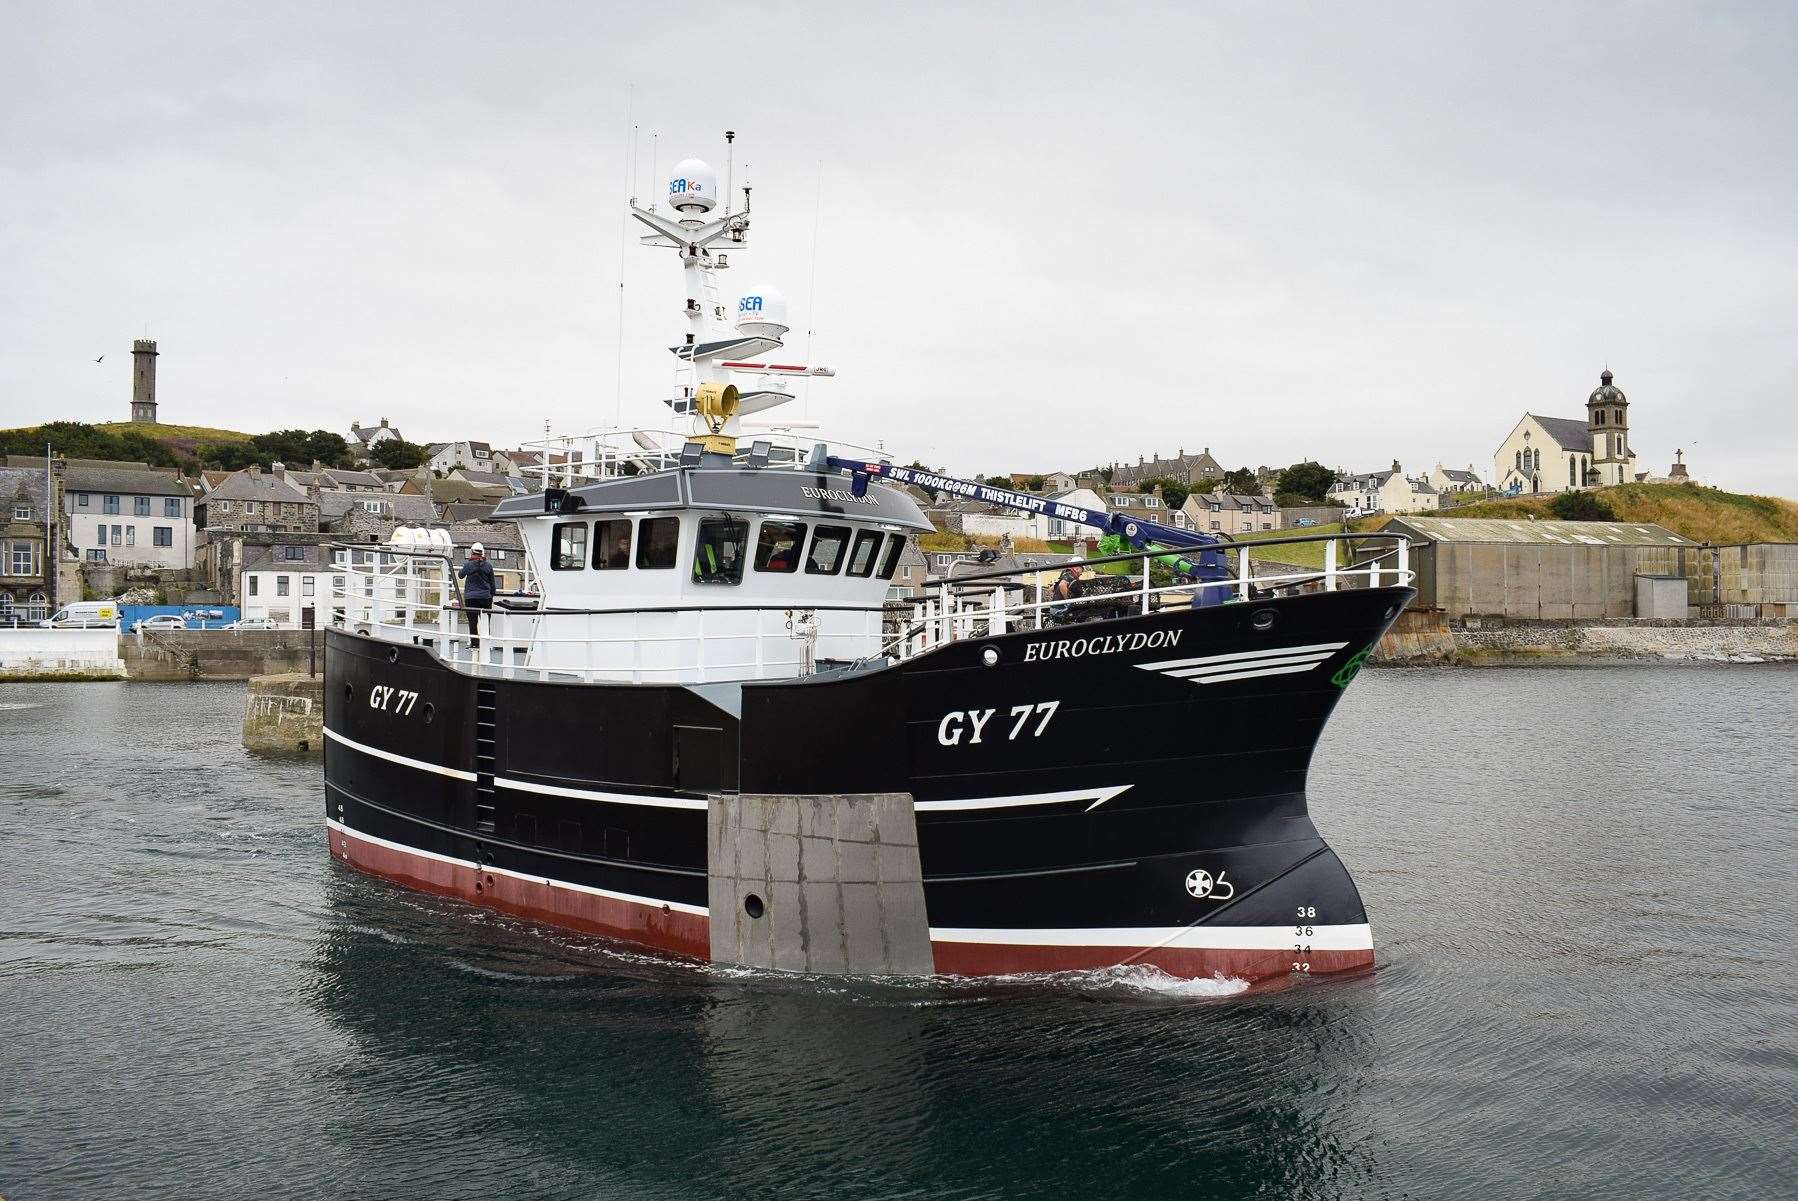 Macduff Shipyards latest new build fishing vessel Euroclydon.